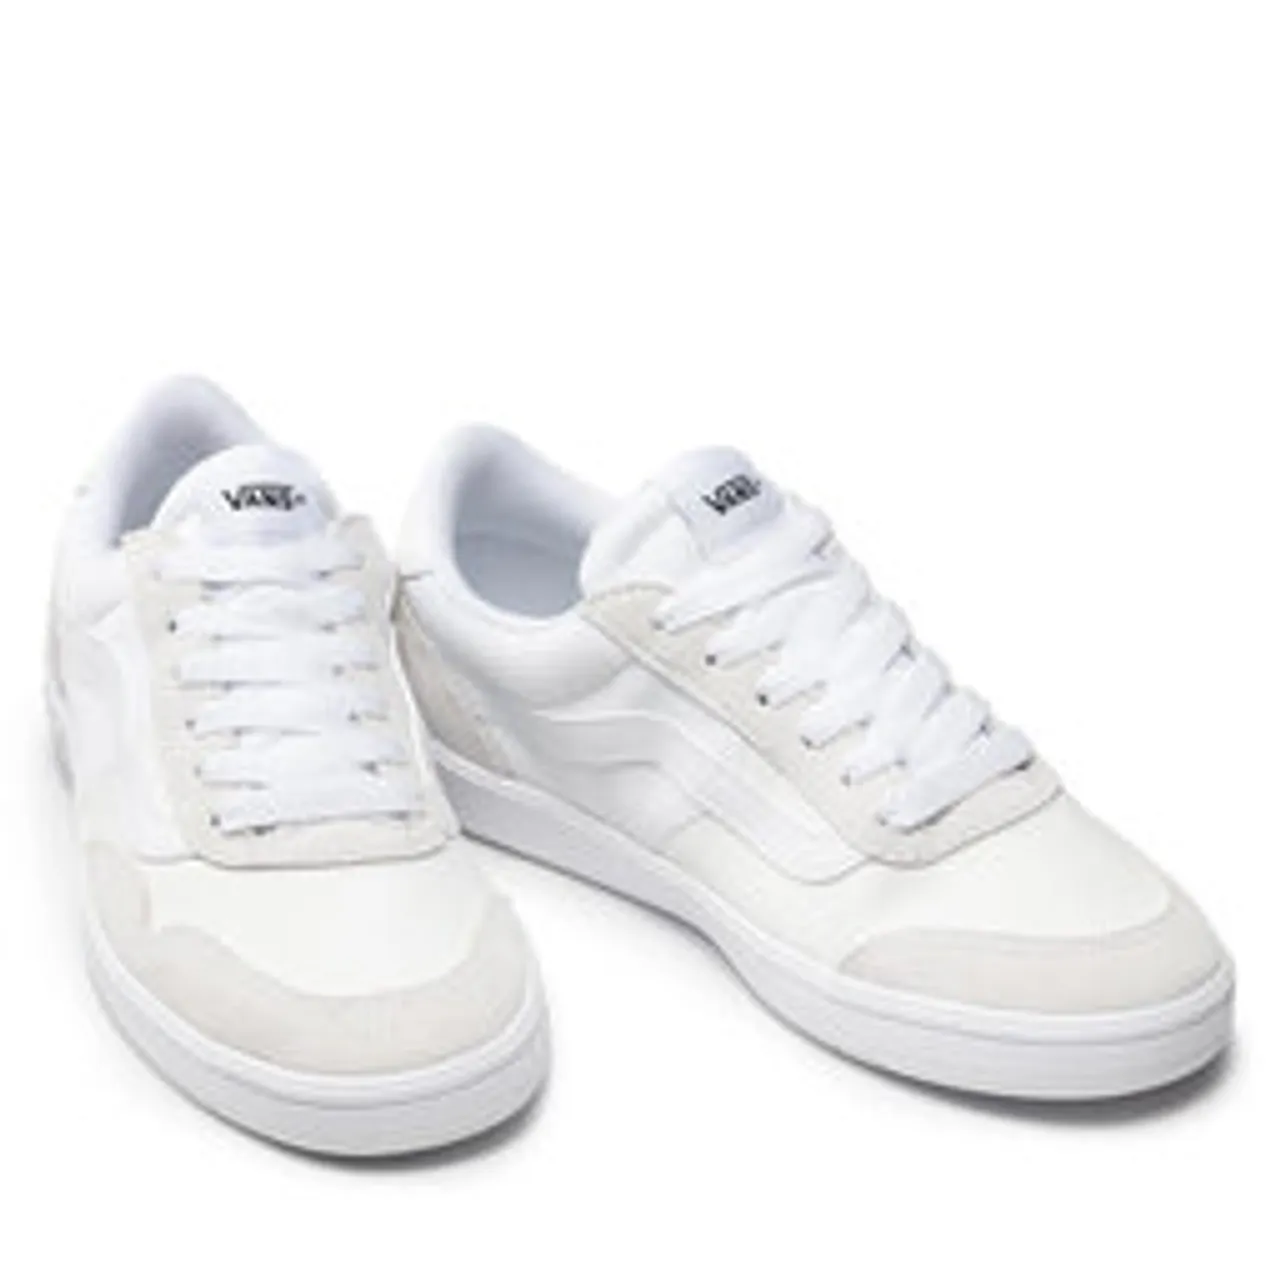 Sneakers Vans Cruze Too Cc VN0A5KR5OIJ1 (Staple) True White/Trwht